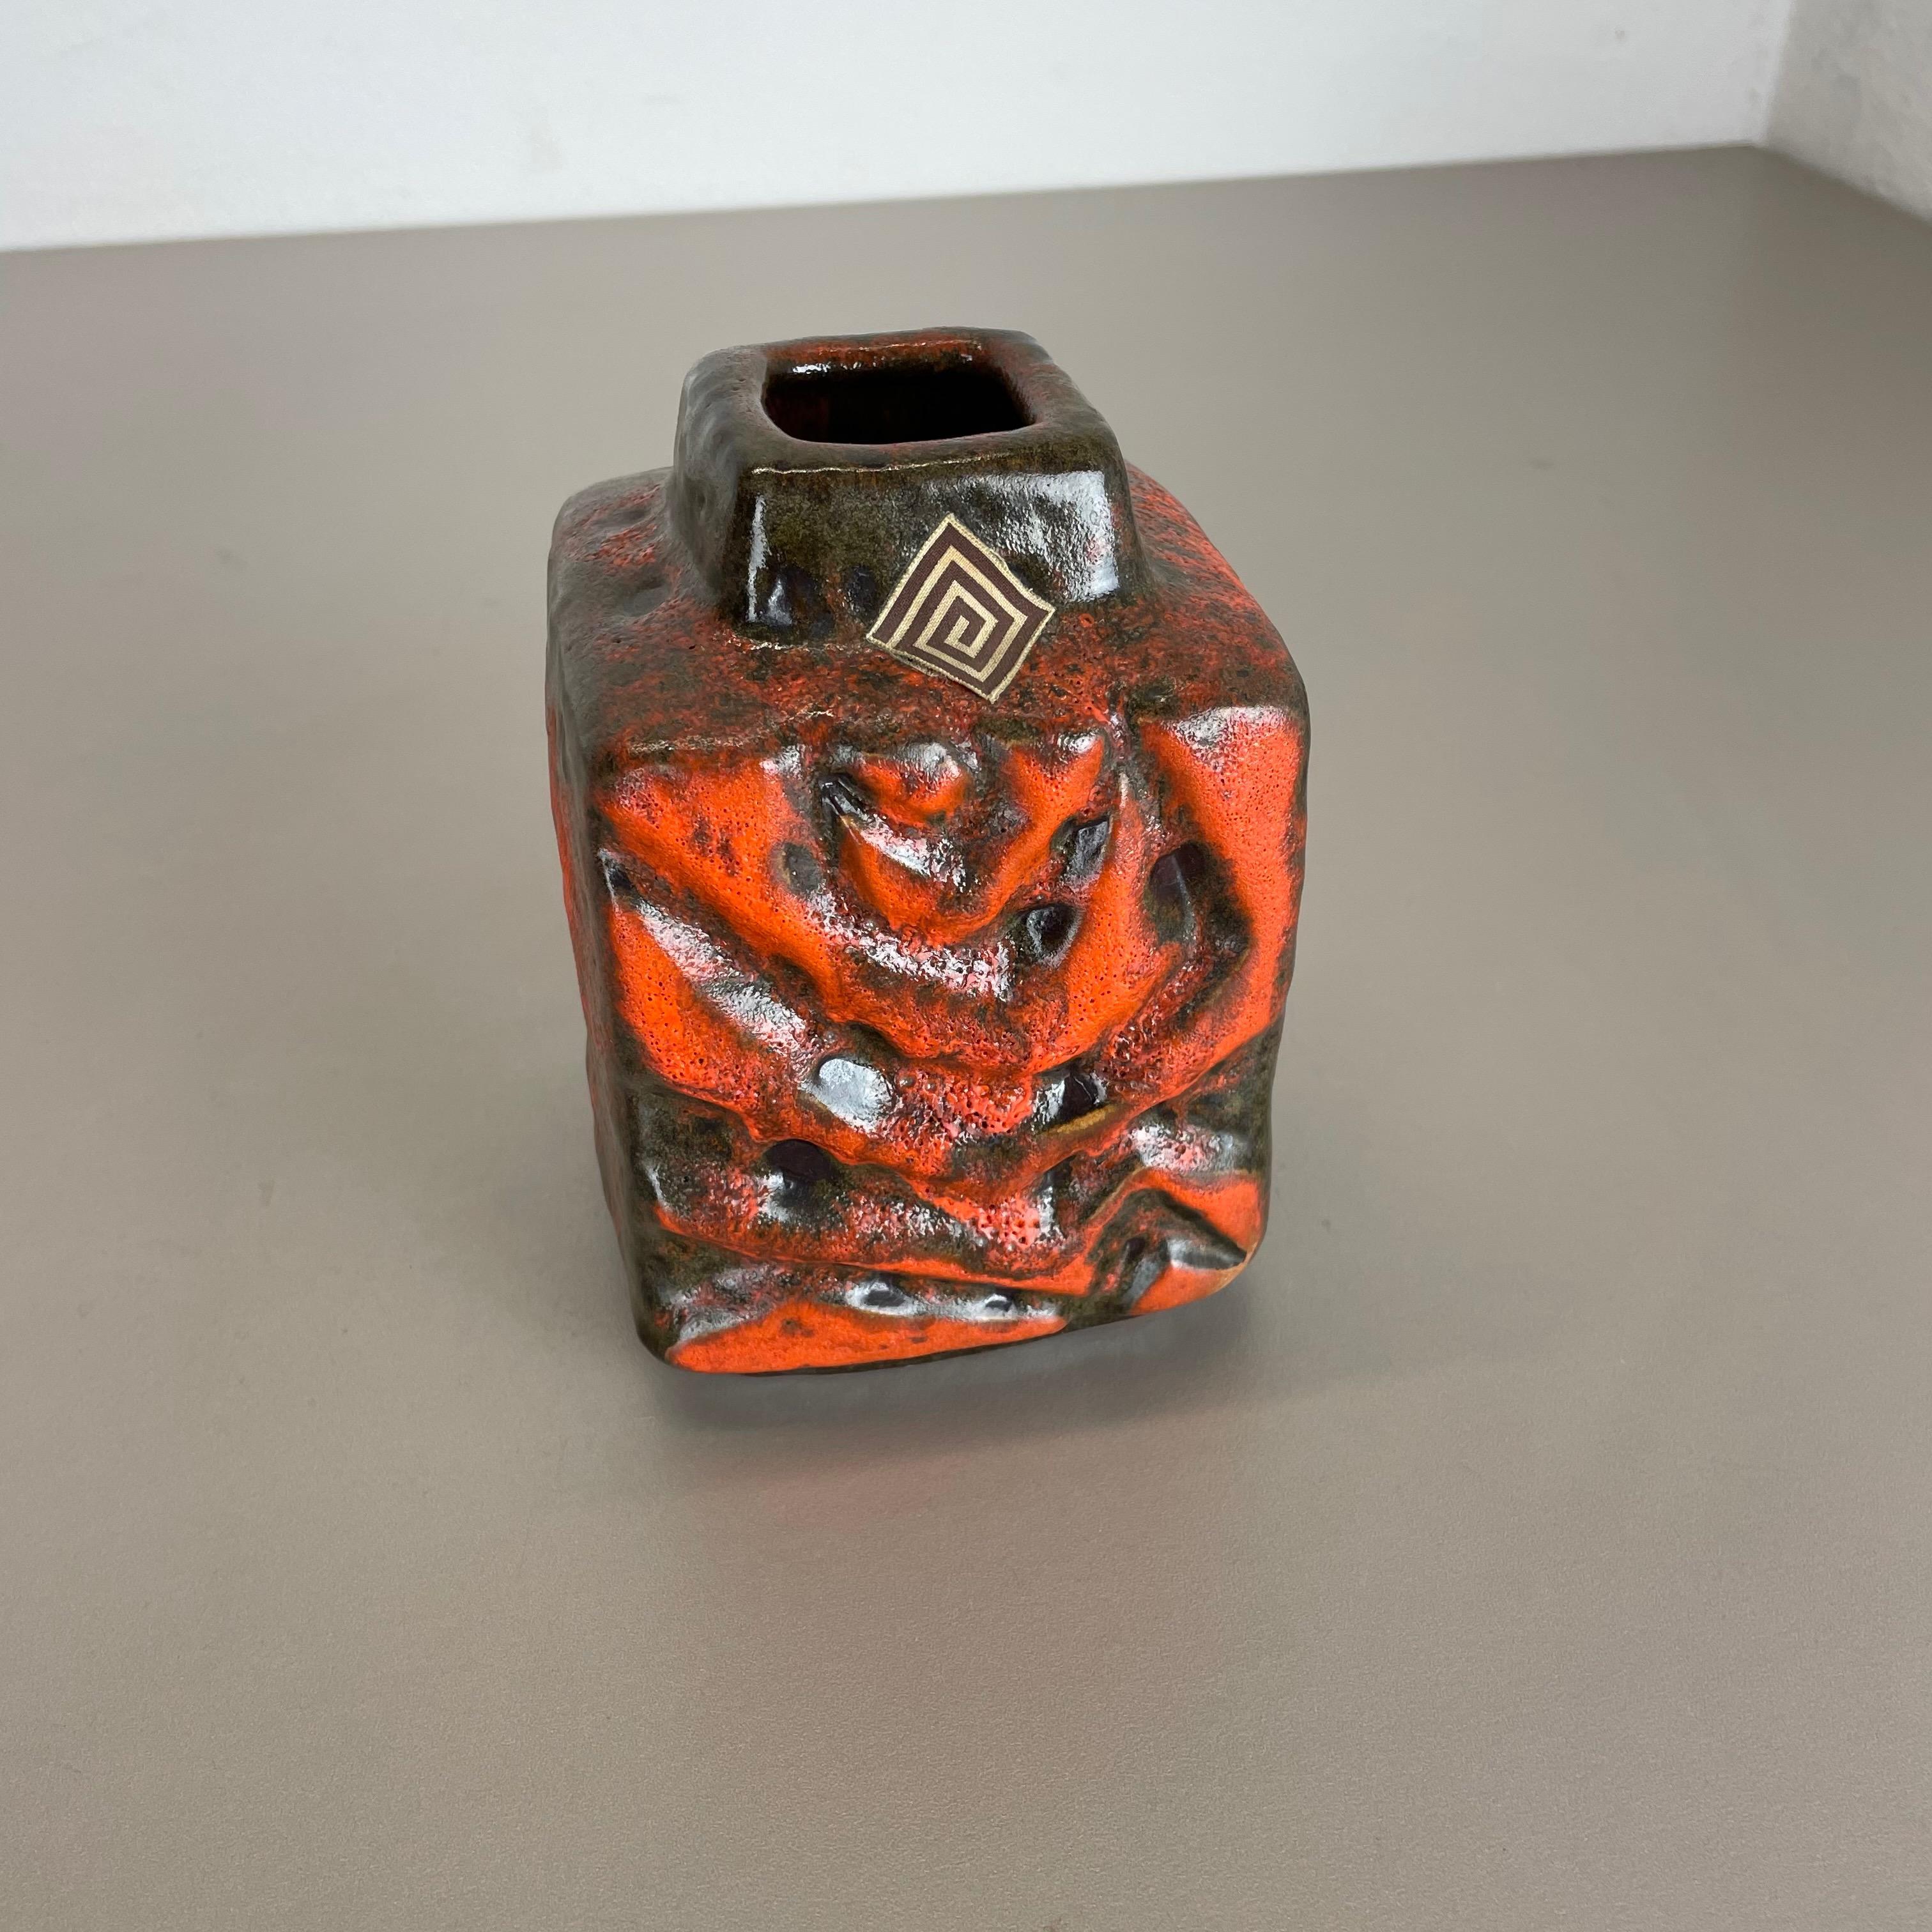 Super-Glasur WGP Fett Lava Keramik Vase Carstens Tnnieshof Deutschland, 1970er Jahre (20. Jahrhundert) im Angebot